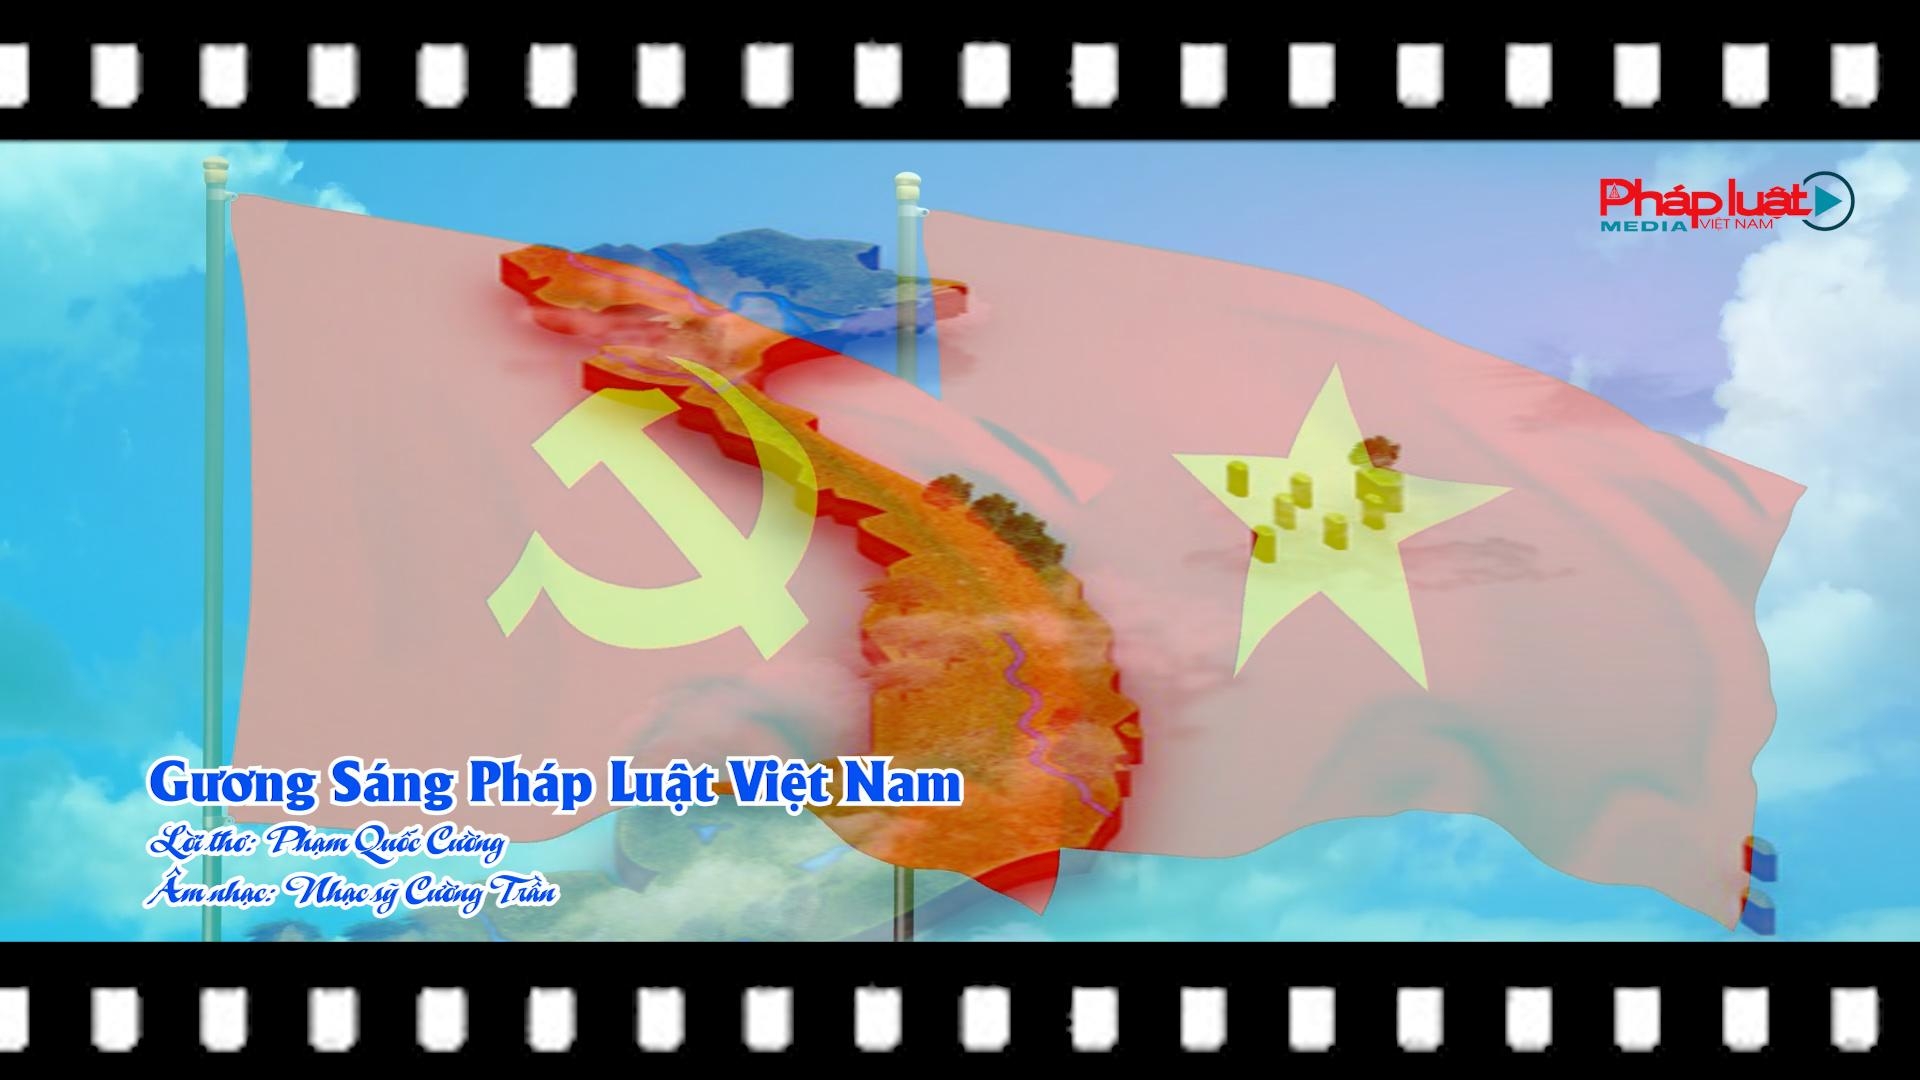 MV "Gương sáng pháp luật Việt Nam"